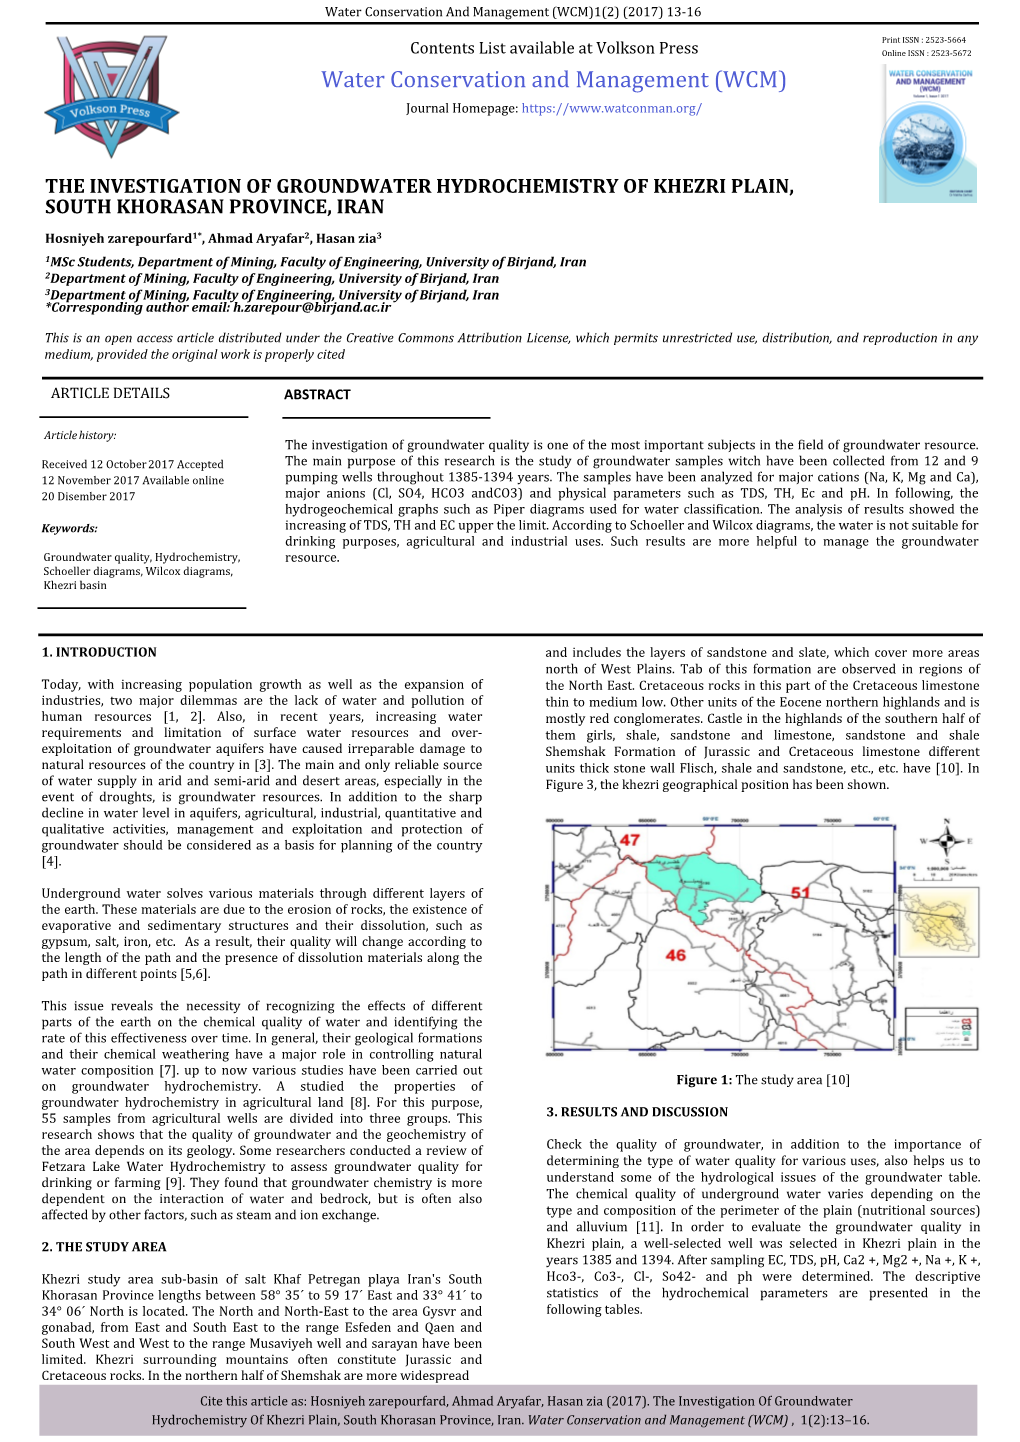 The Investigation of Groundwater Hydrochemistry of Khezri Plain, South Khorasan Province, Iran